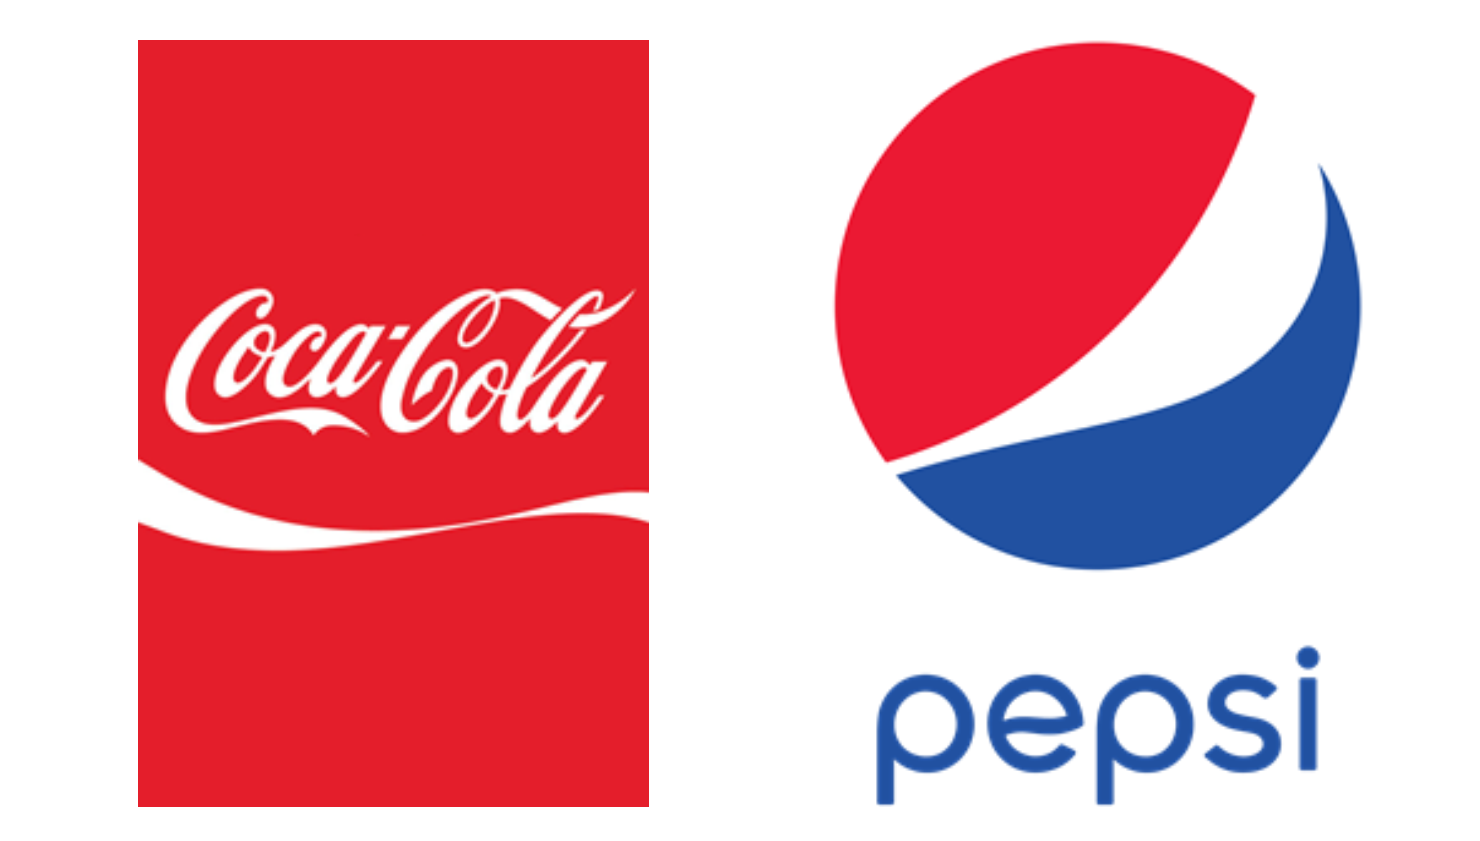 Coca-Cola and Pepsi logos nowadays